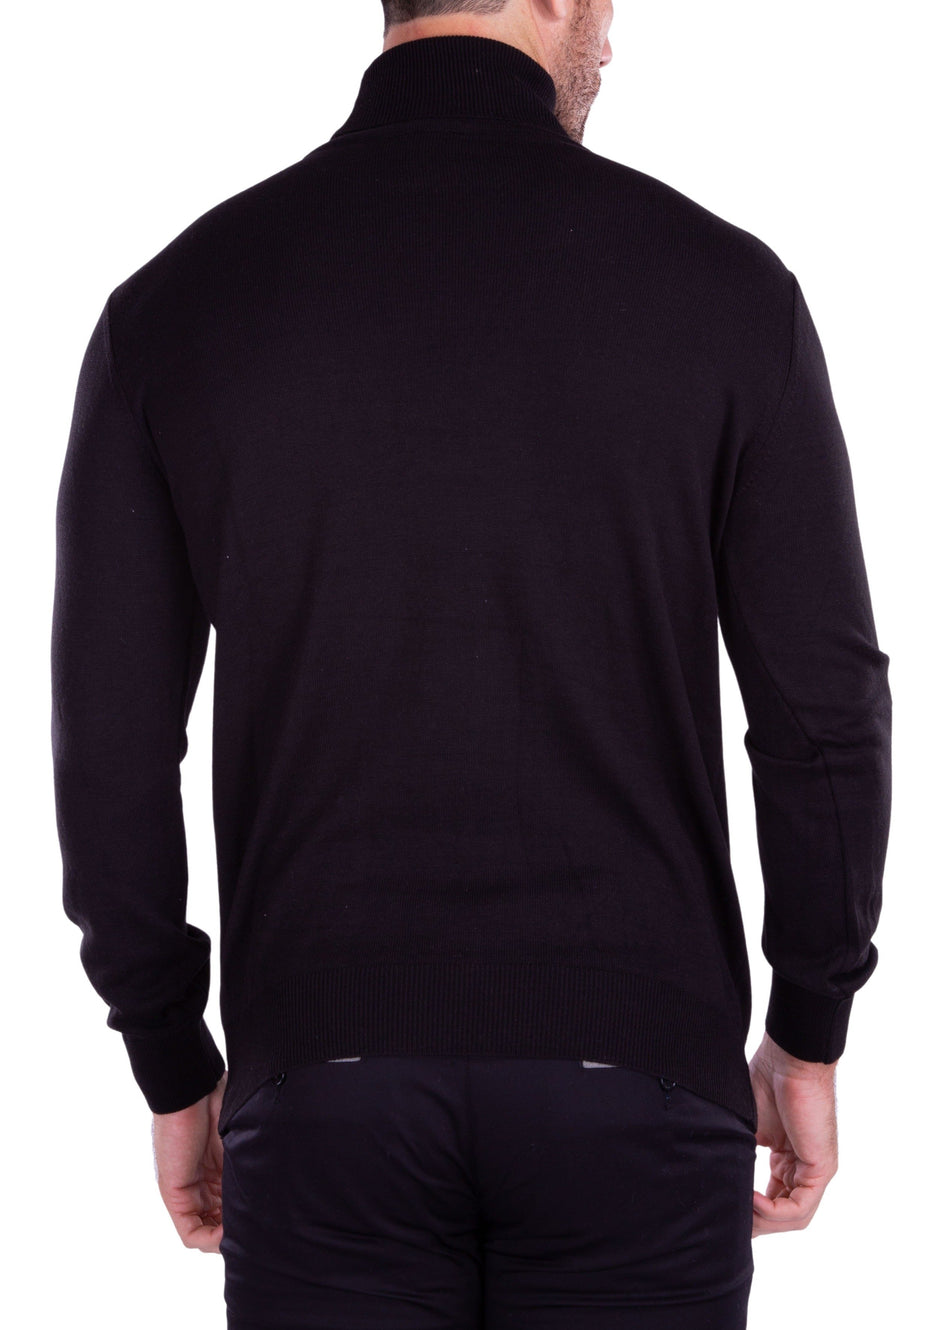 215100 - Black Turtleneck Sweater